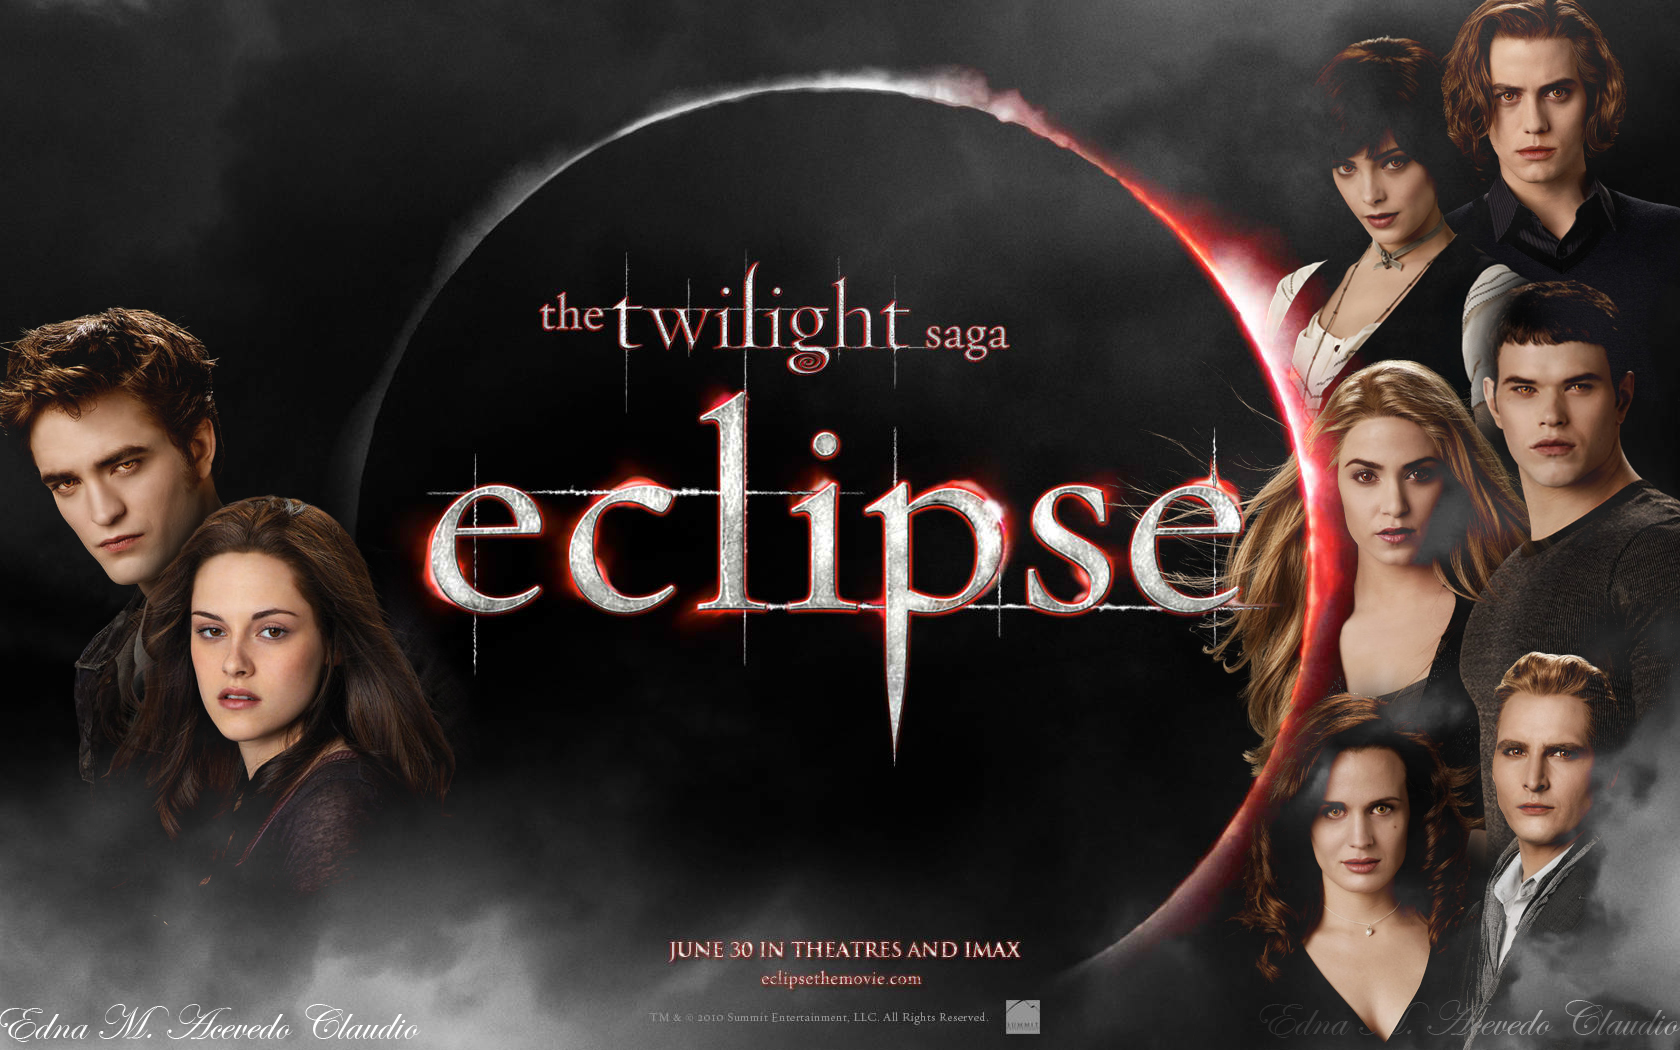 The Twilight Saga: Eclipse #1